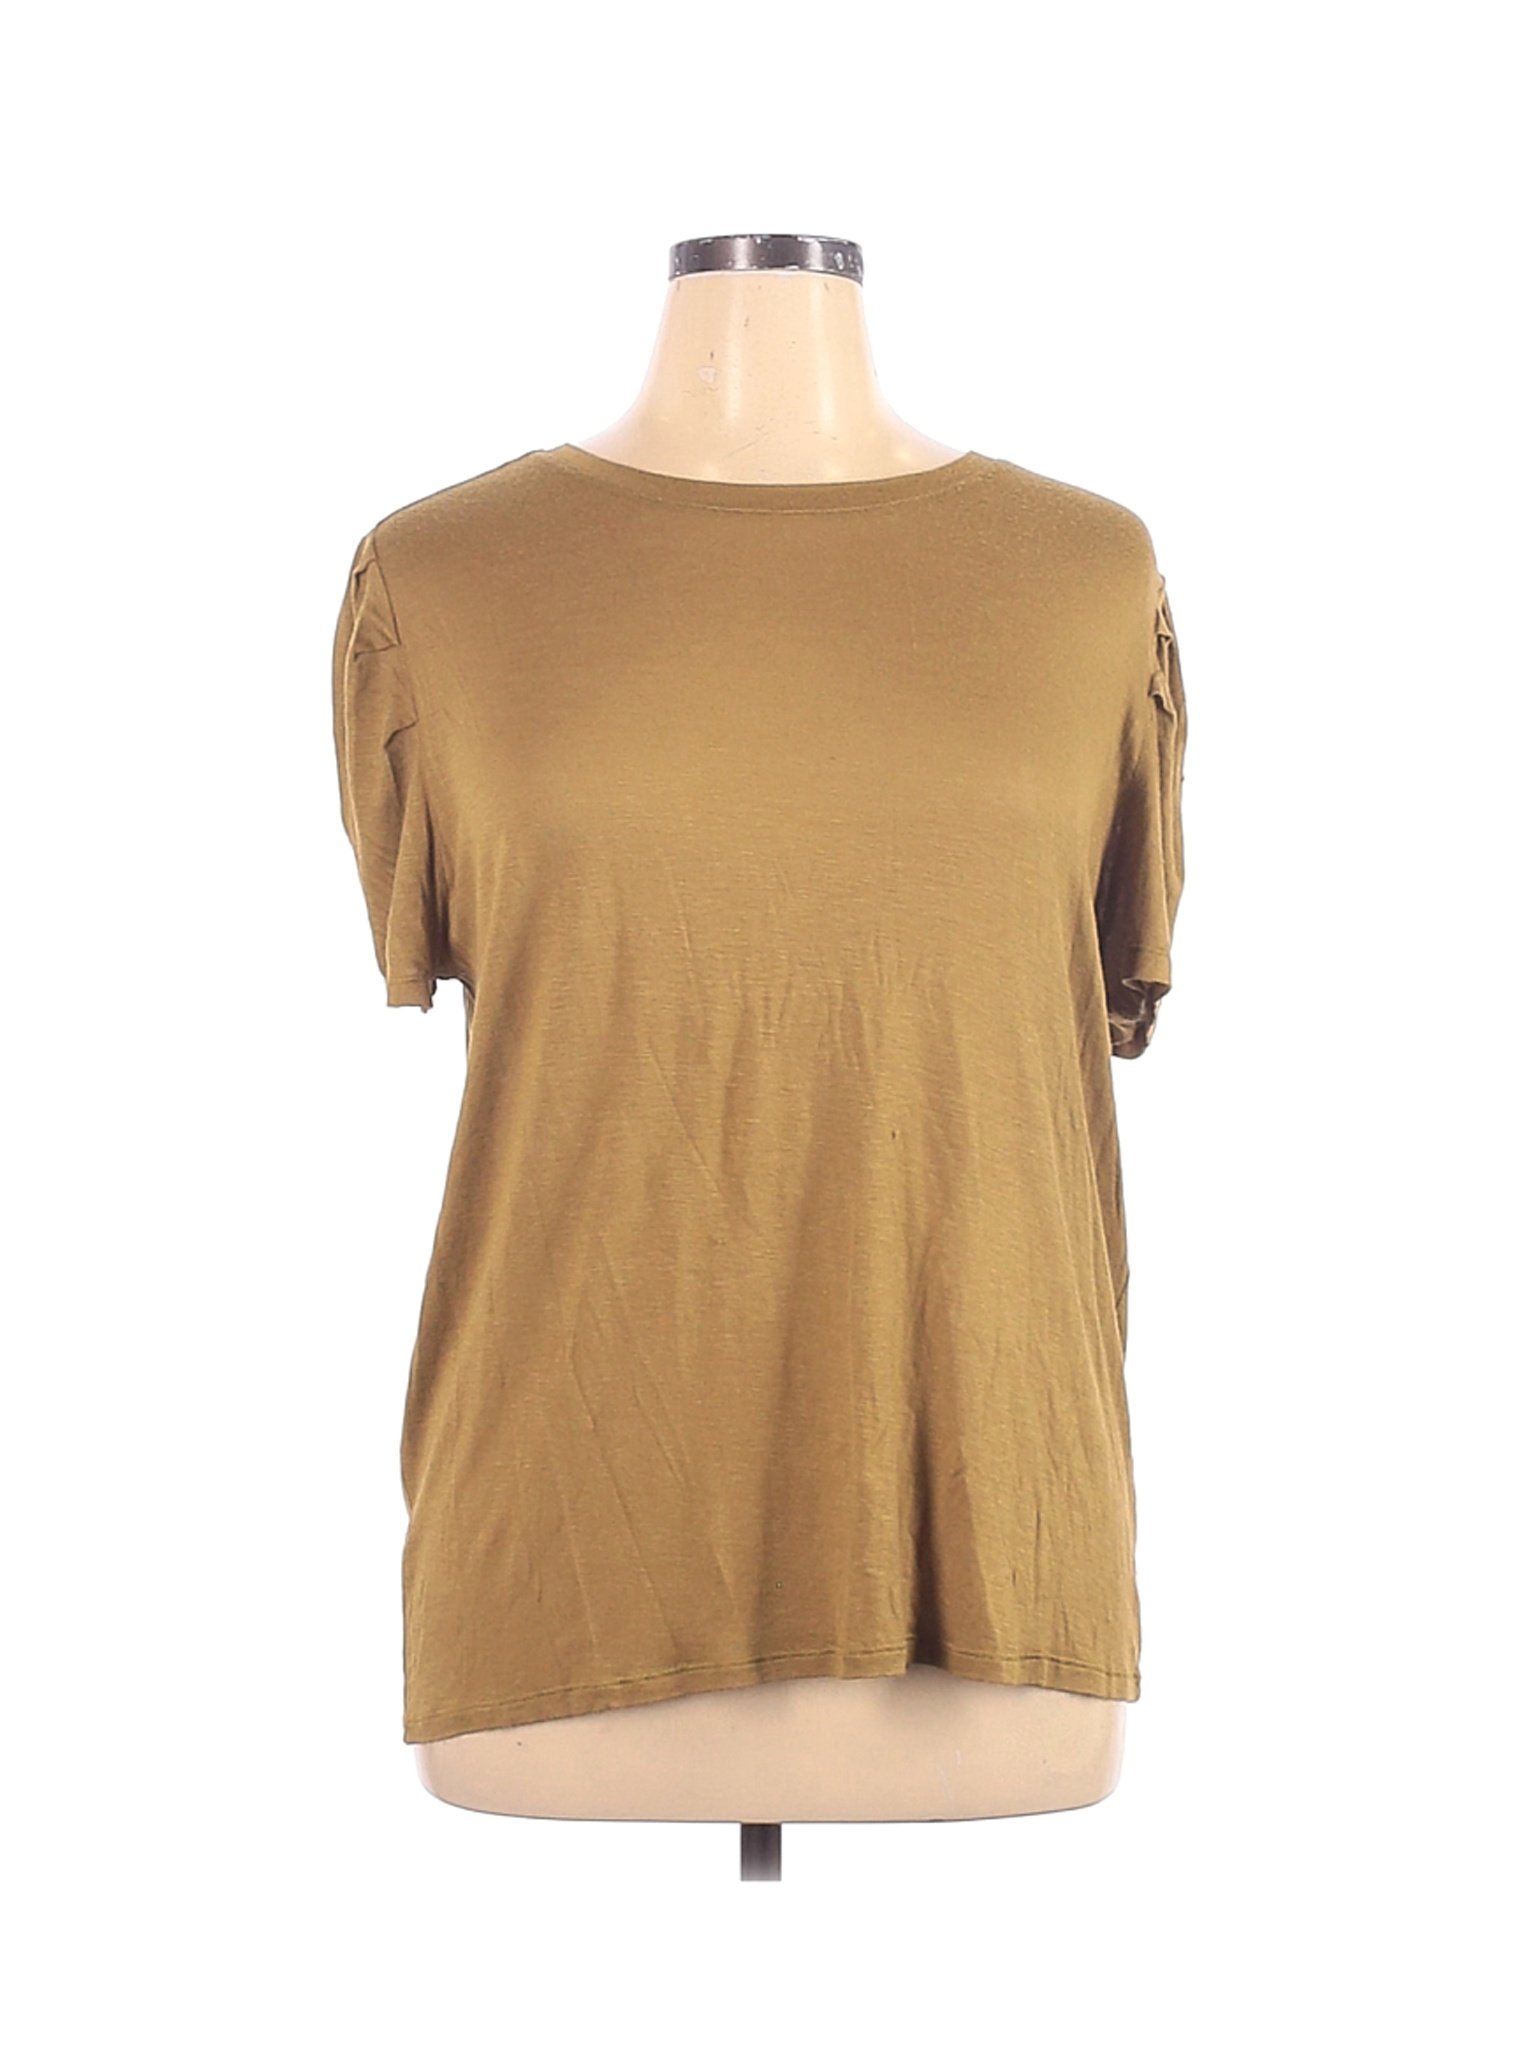 Chelsea28 Women Brown Short Sleeve Top XL | eBay